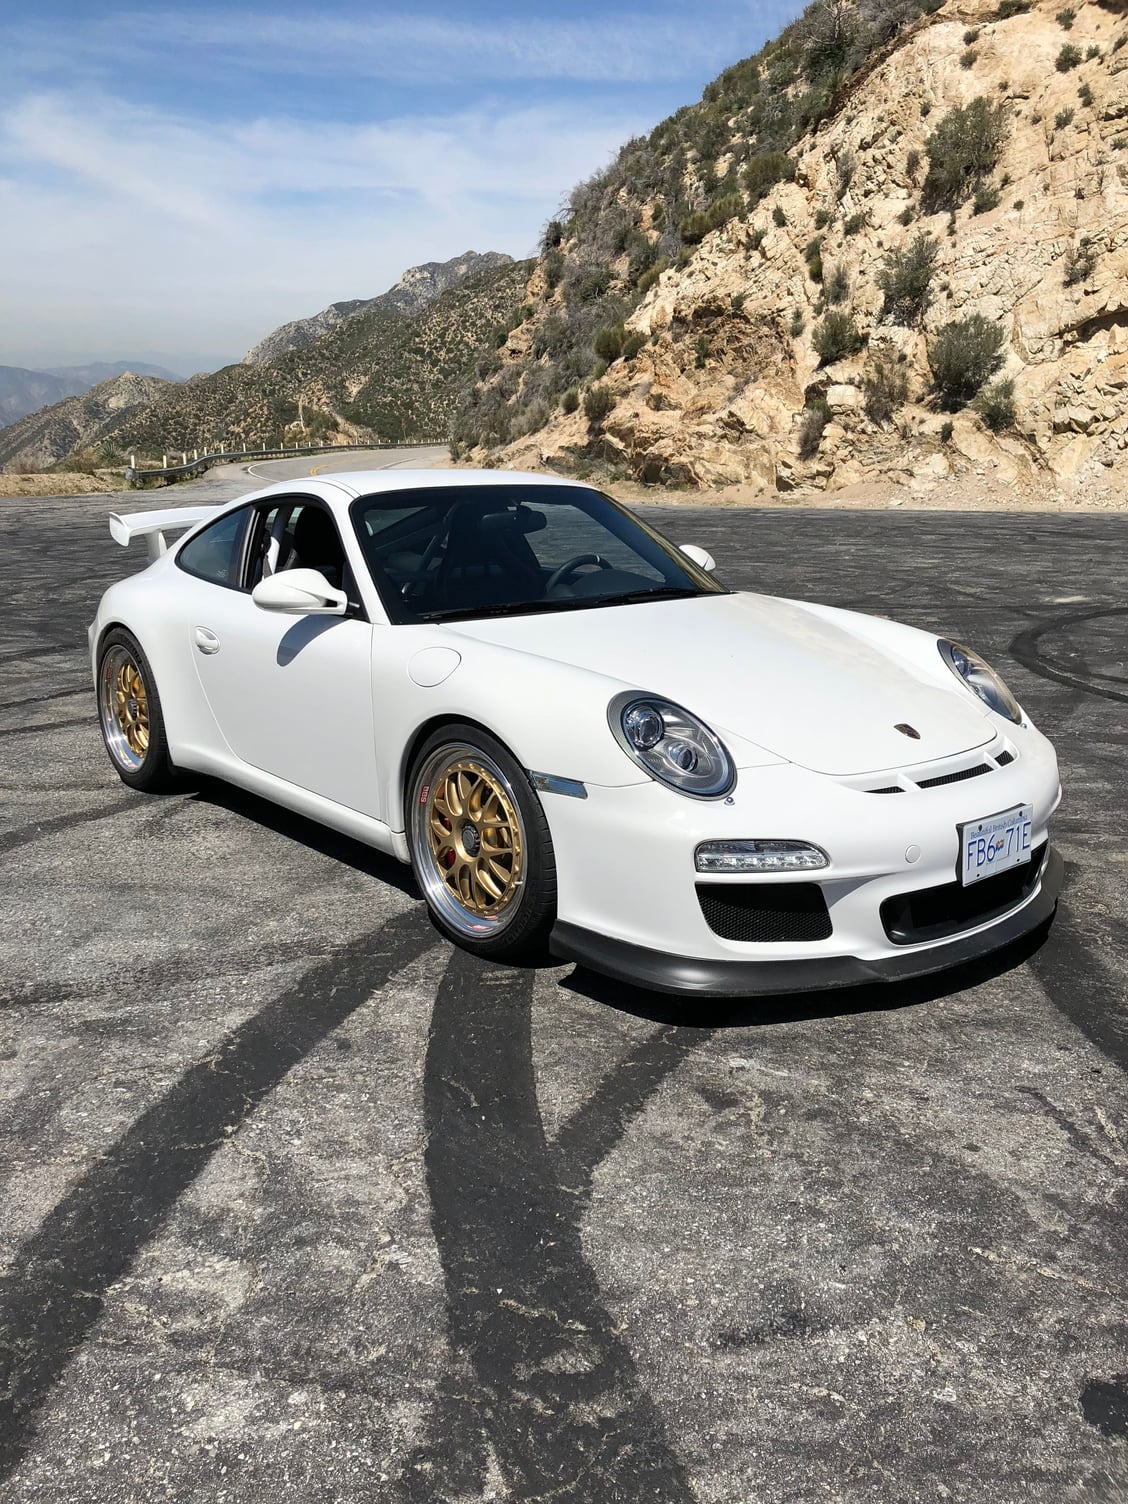 Lets see your 997 - Page 222 - Rennlist - Porsche 